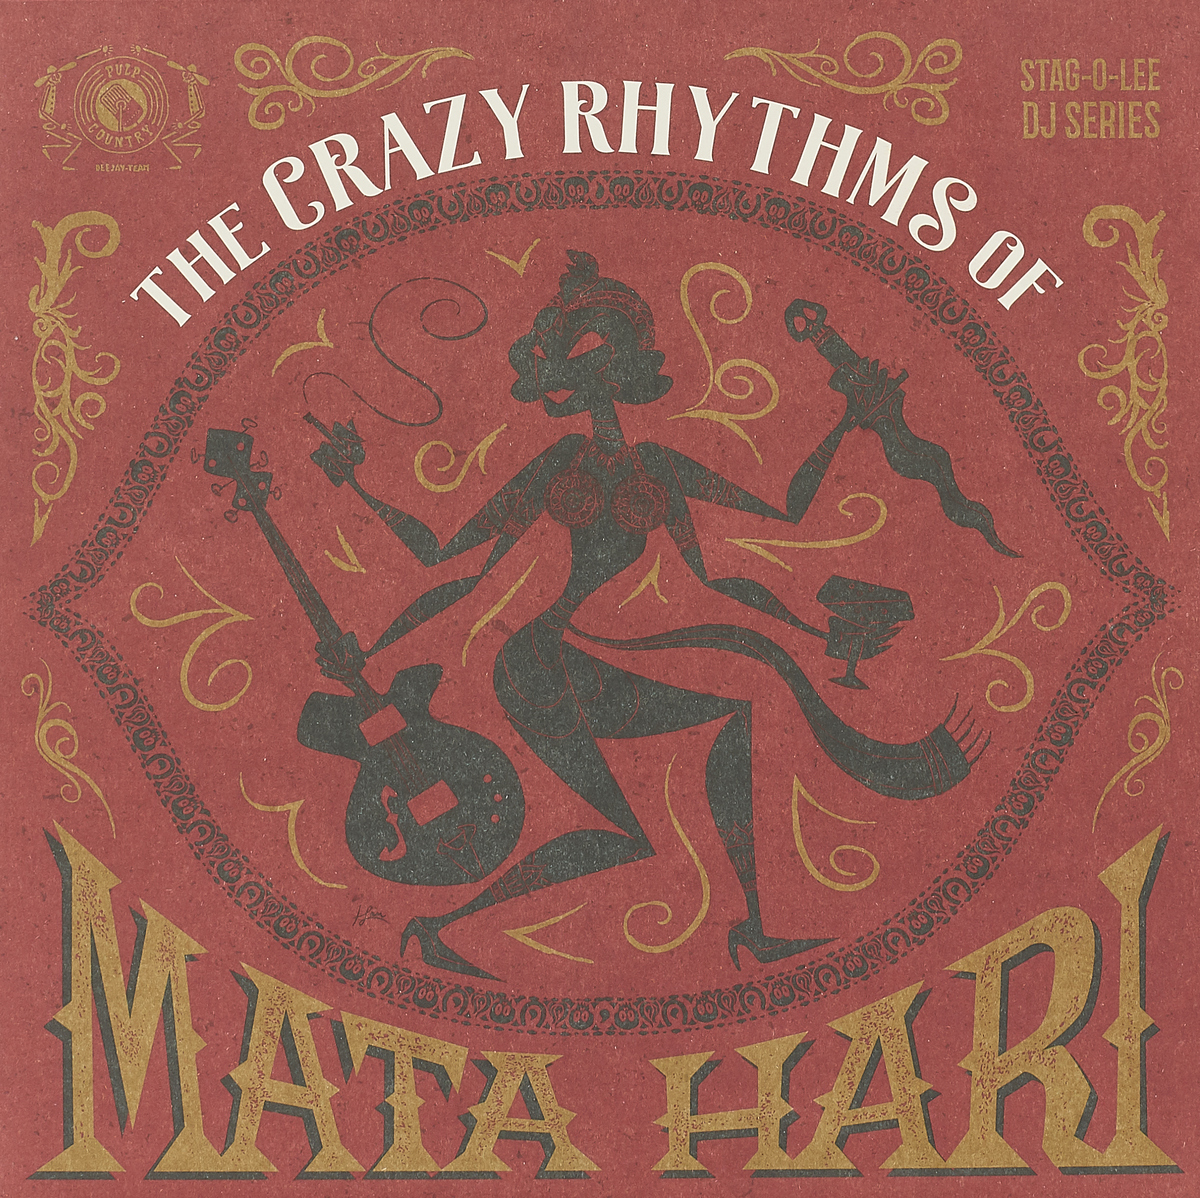 The Crazy Rhythms Of Mata Hari (2 LP)